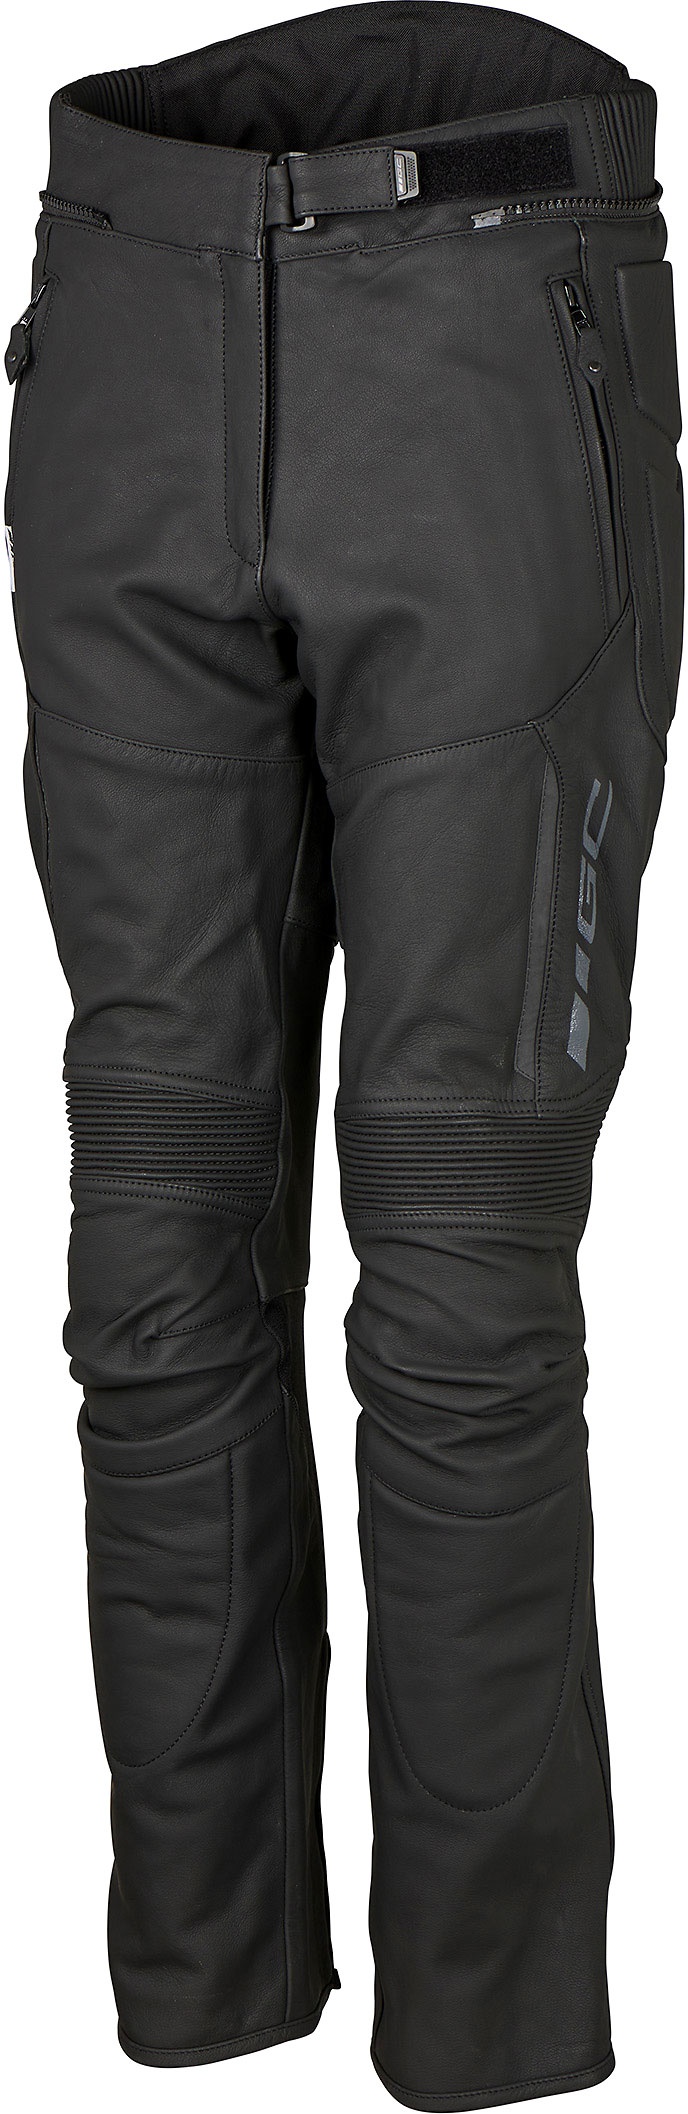 GC Bikewear Sienna, pantalon en cuir pour femmes - Noir - 44